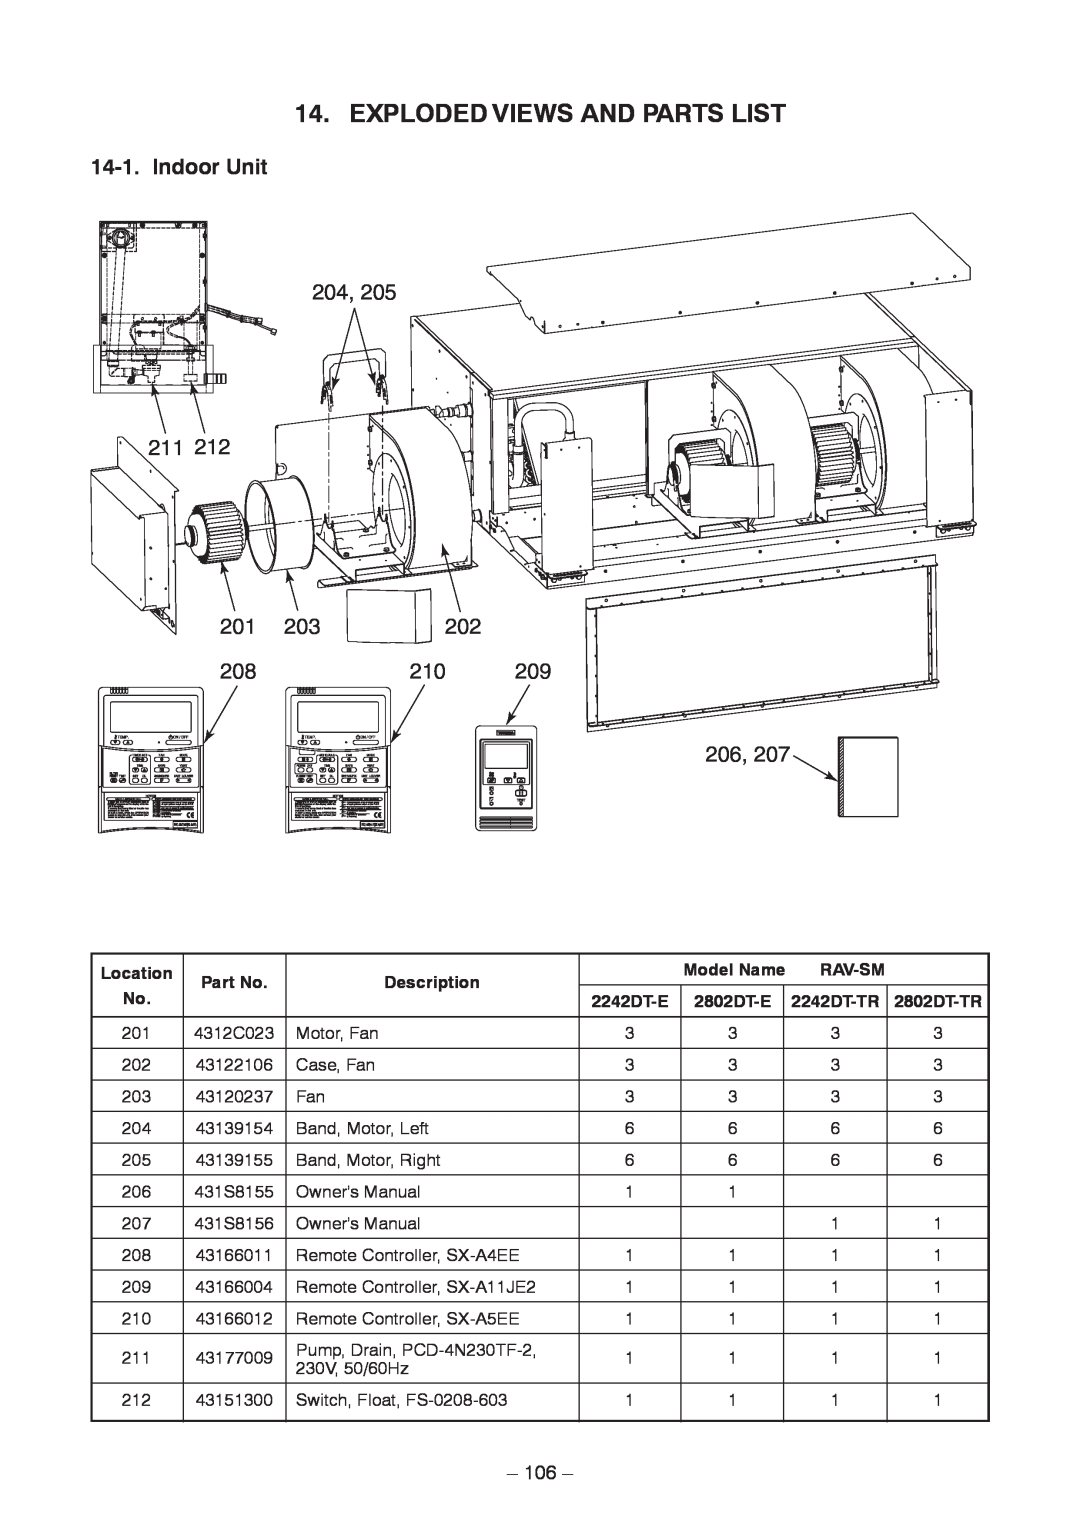 Toshiba RAV-SM2242DT-TR, RAV-SM2802DT-E service manual 204, 211, 206, 106, Location, Part No, Description, Rav-Sm, 2242DT-E 